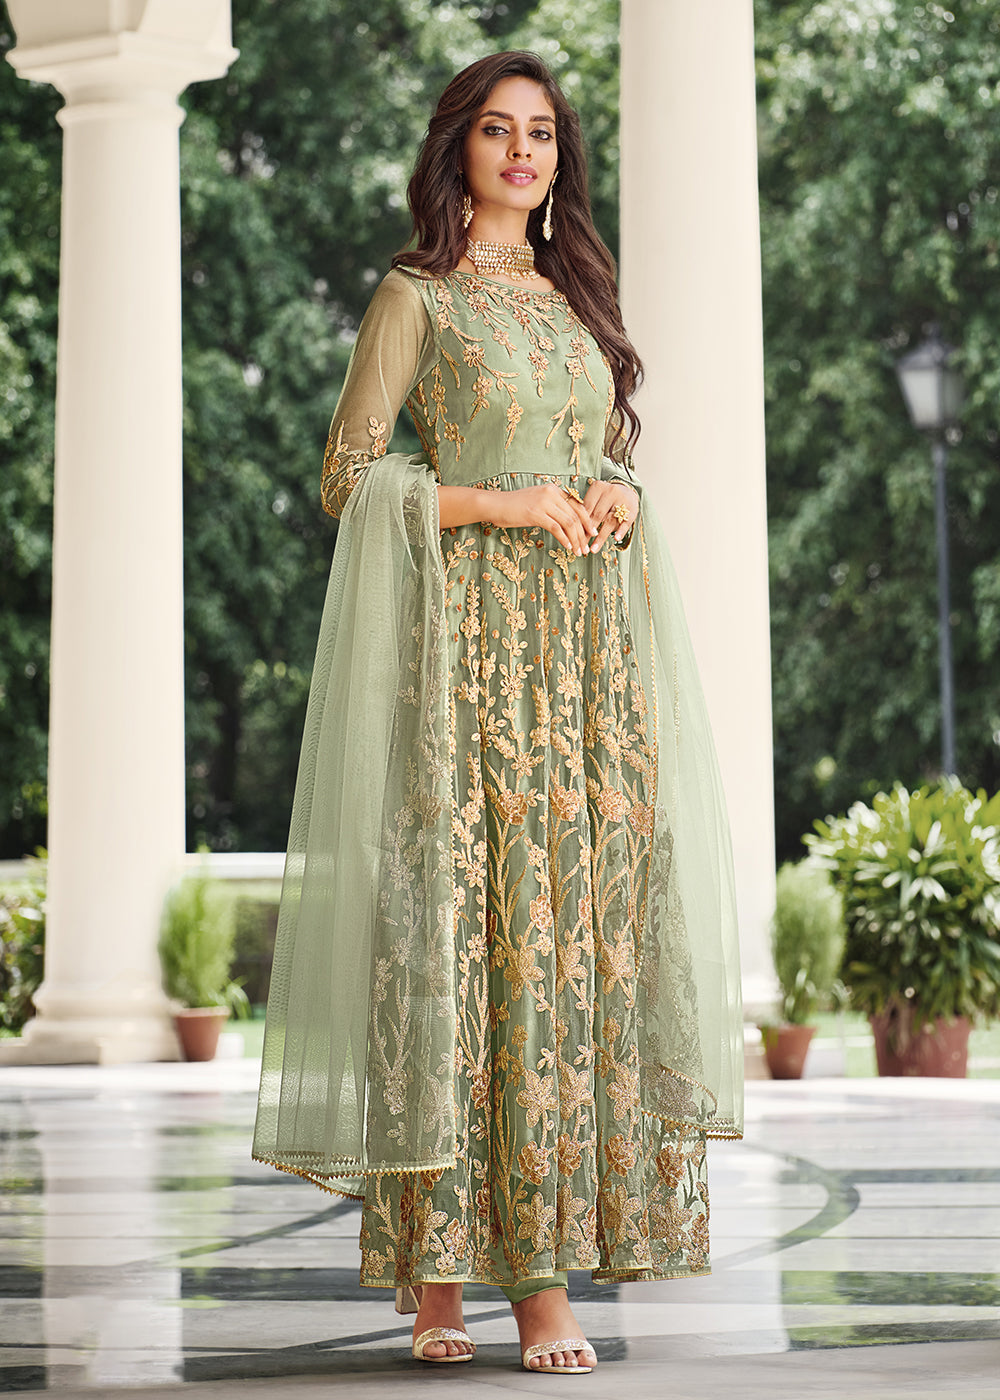 Buy Now Appealing Pista Green Designer Front Slit Anarkali Dress Online in USA, UK, Australia, New Zealand, Canada & Worldwide at Empress Clothing.